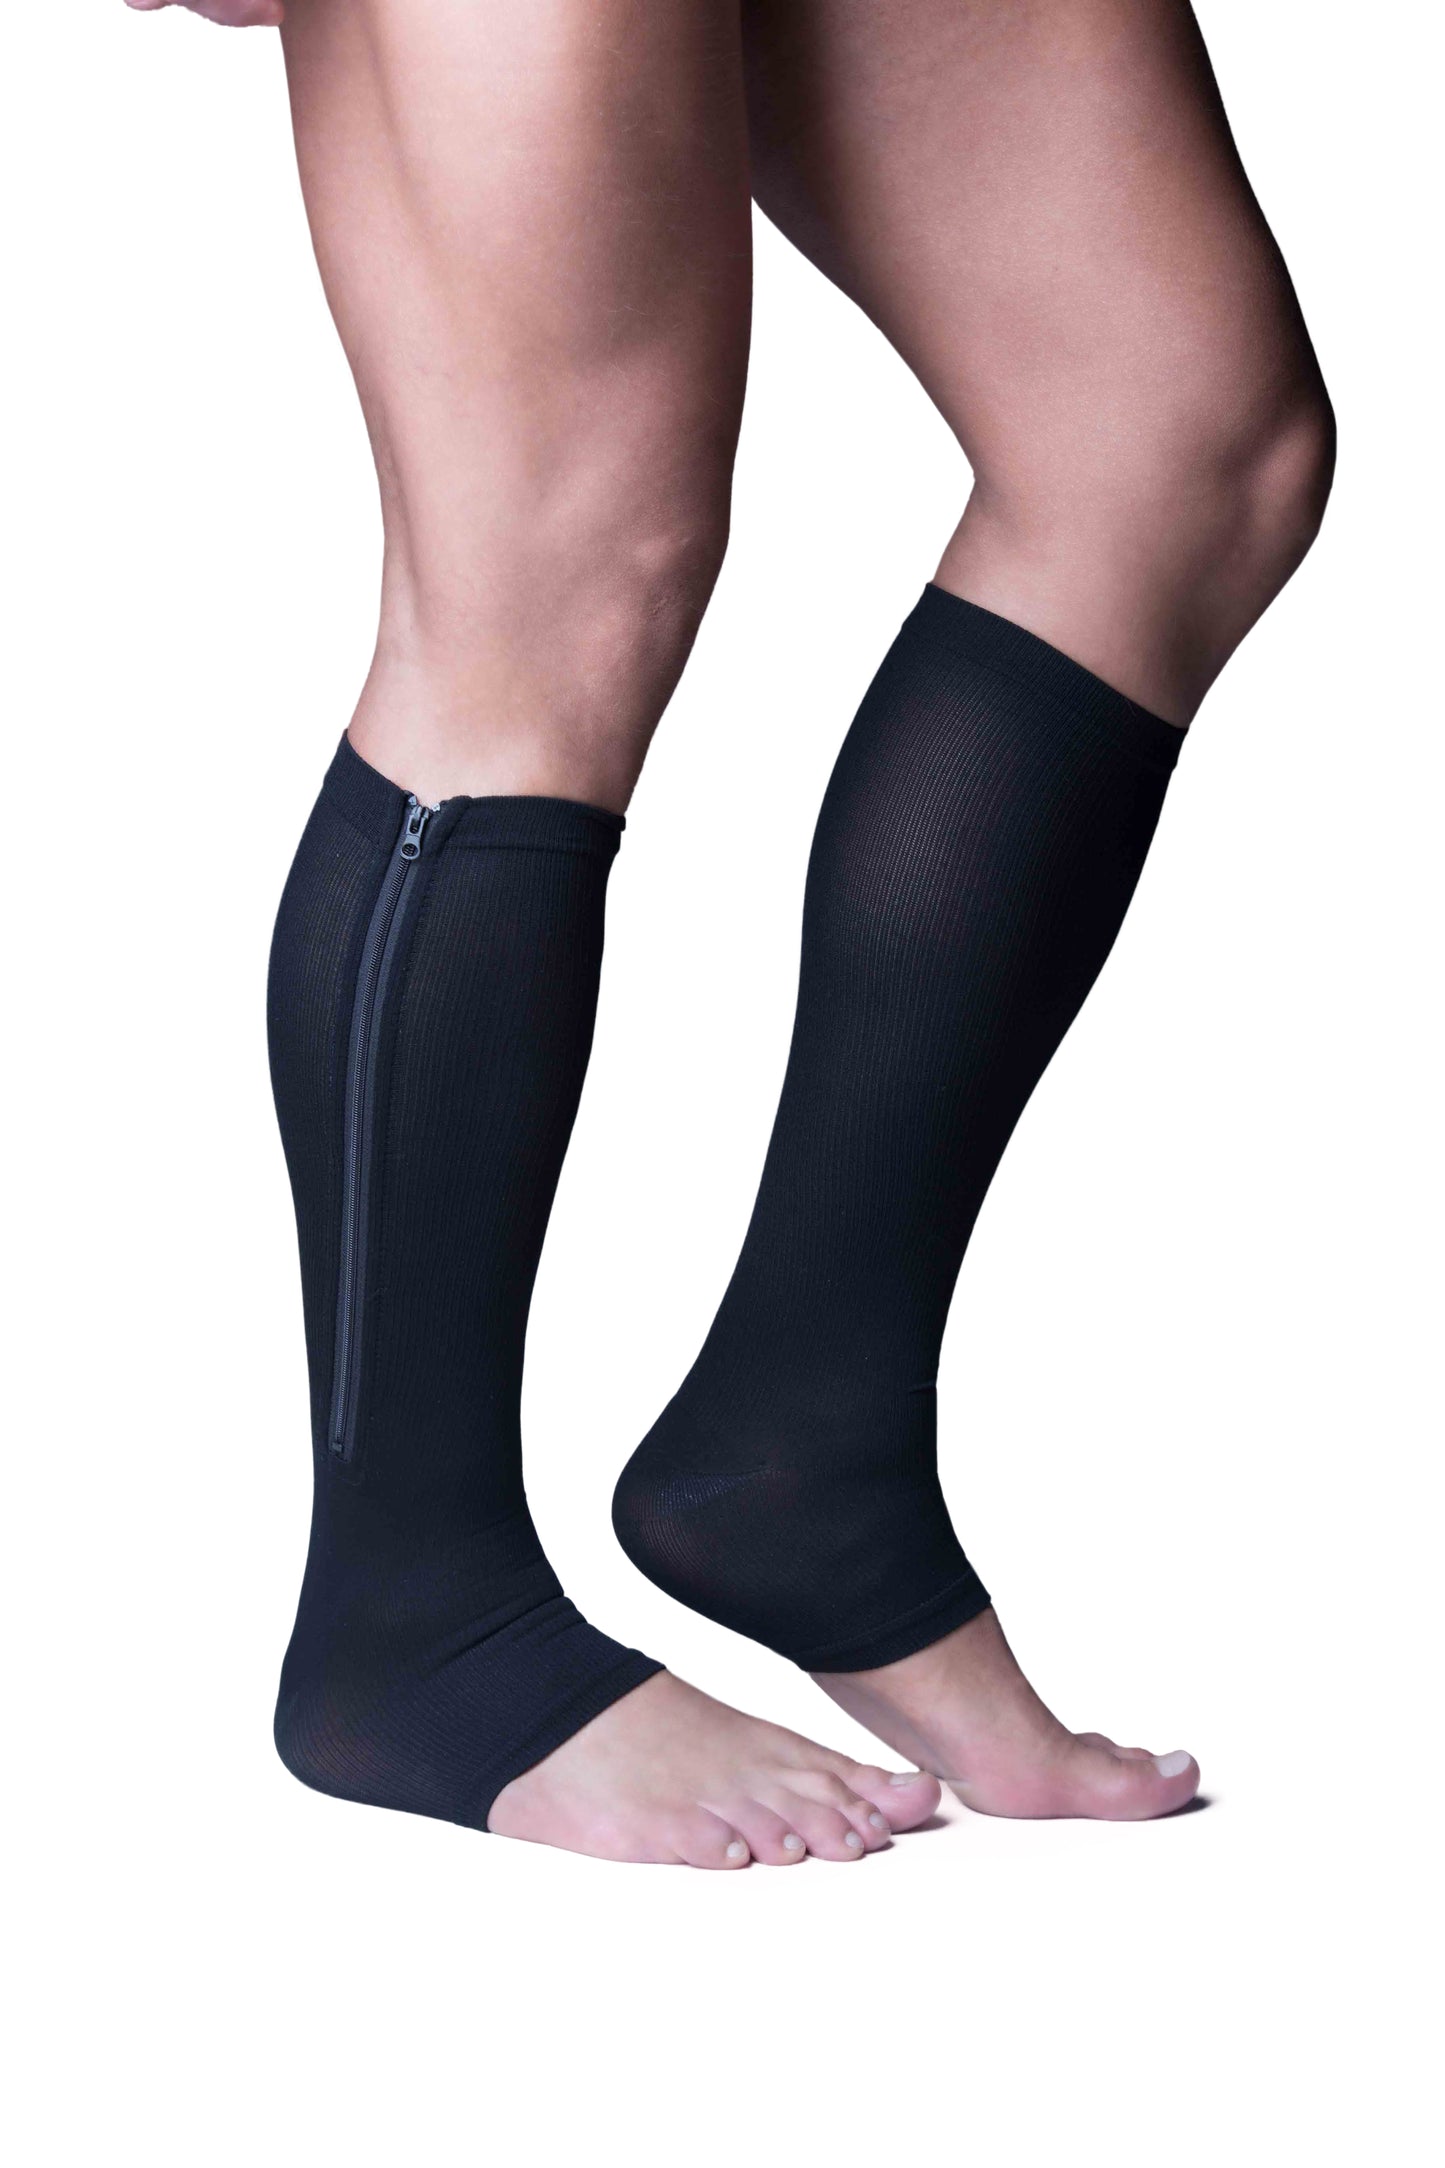 Vital Socks kit - Compression Socks